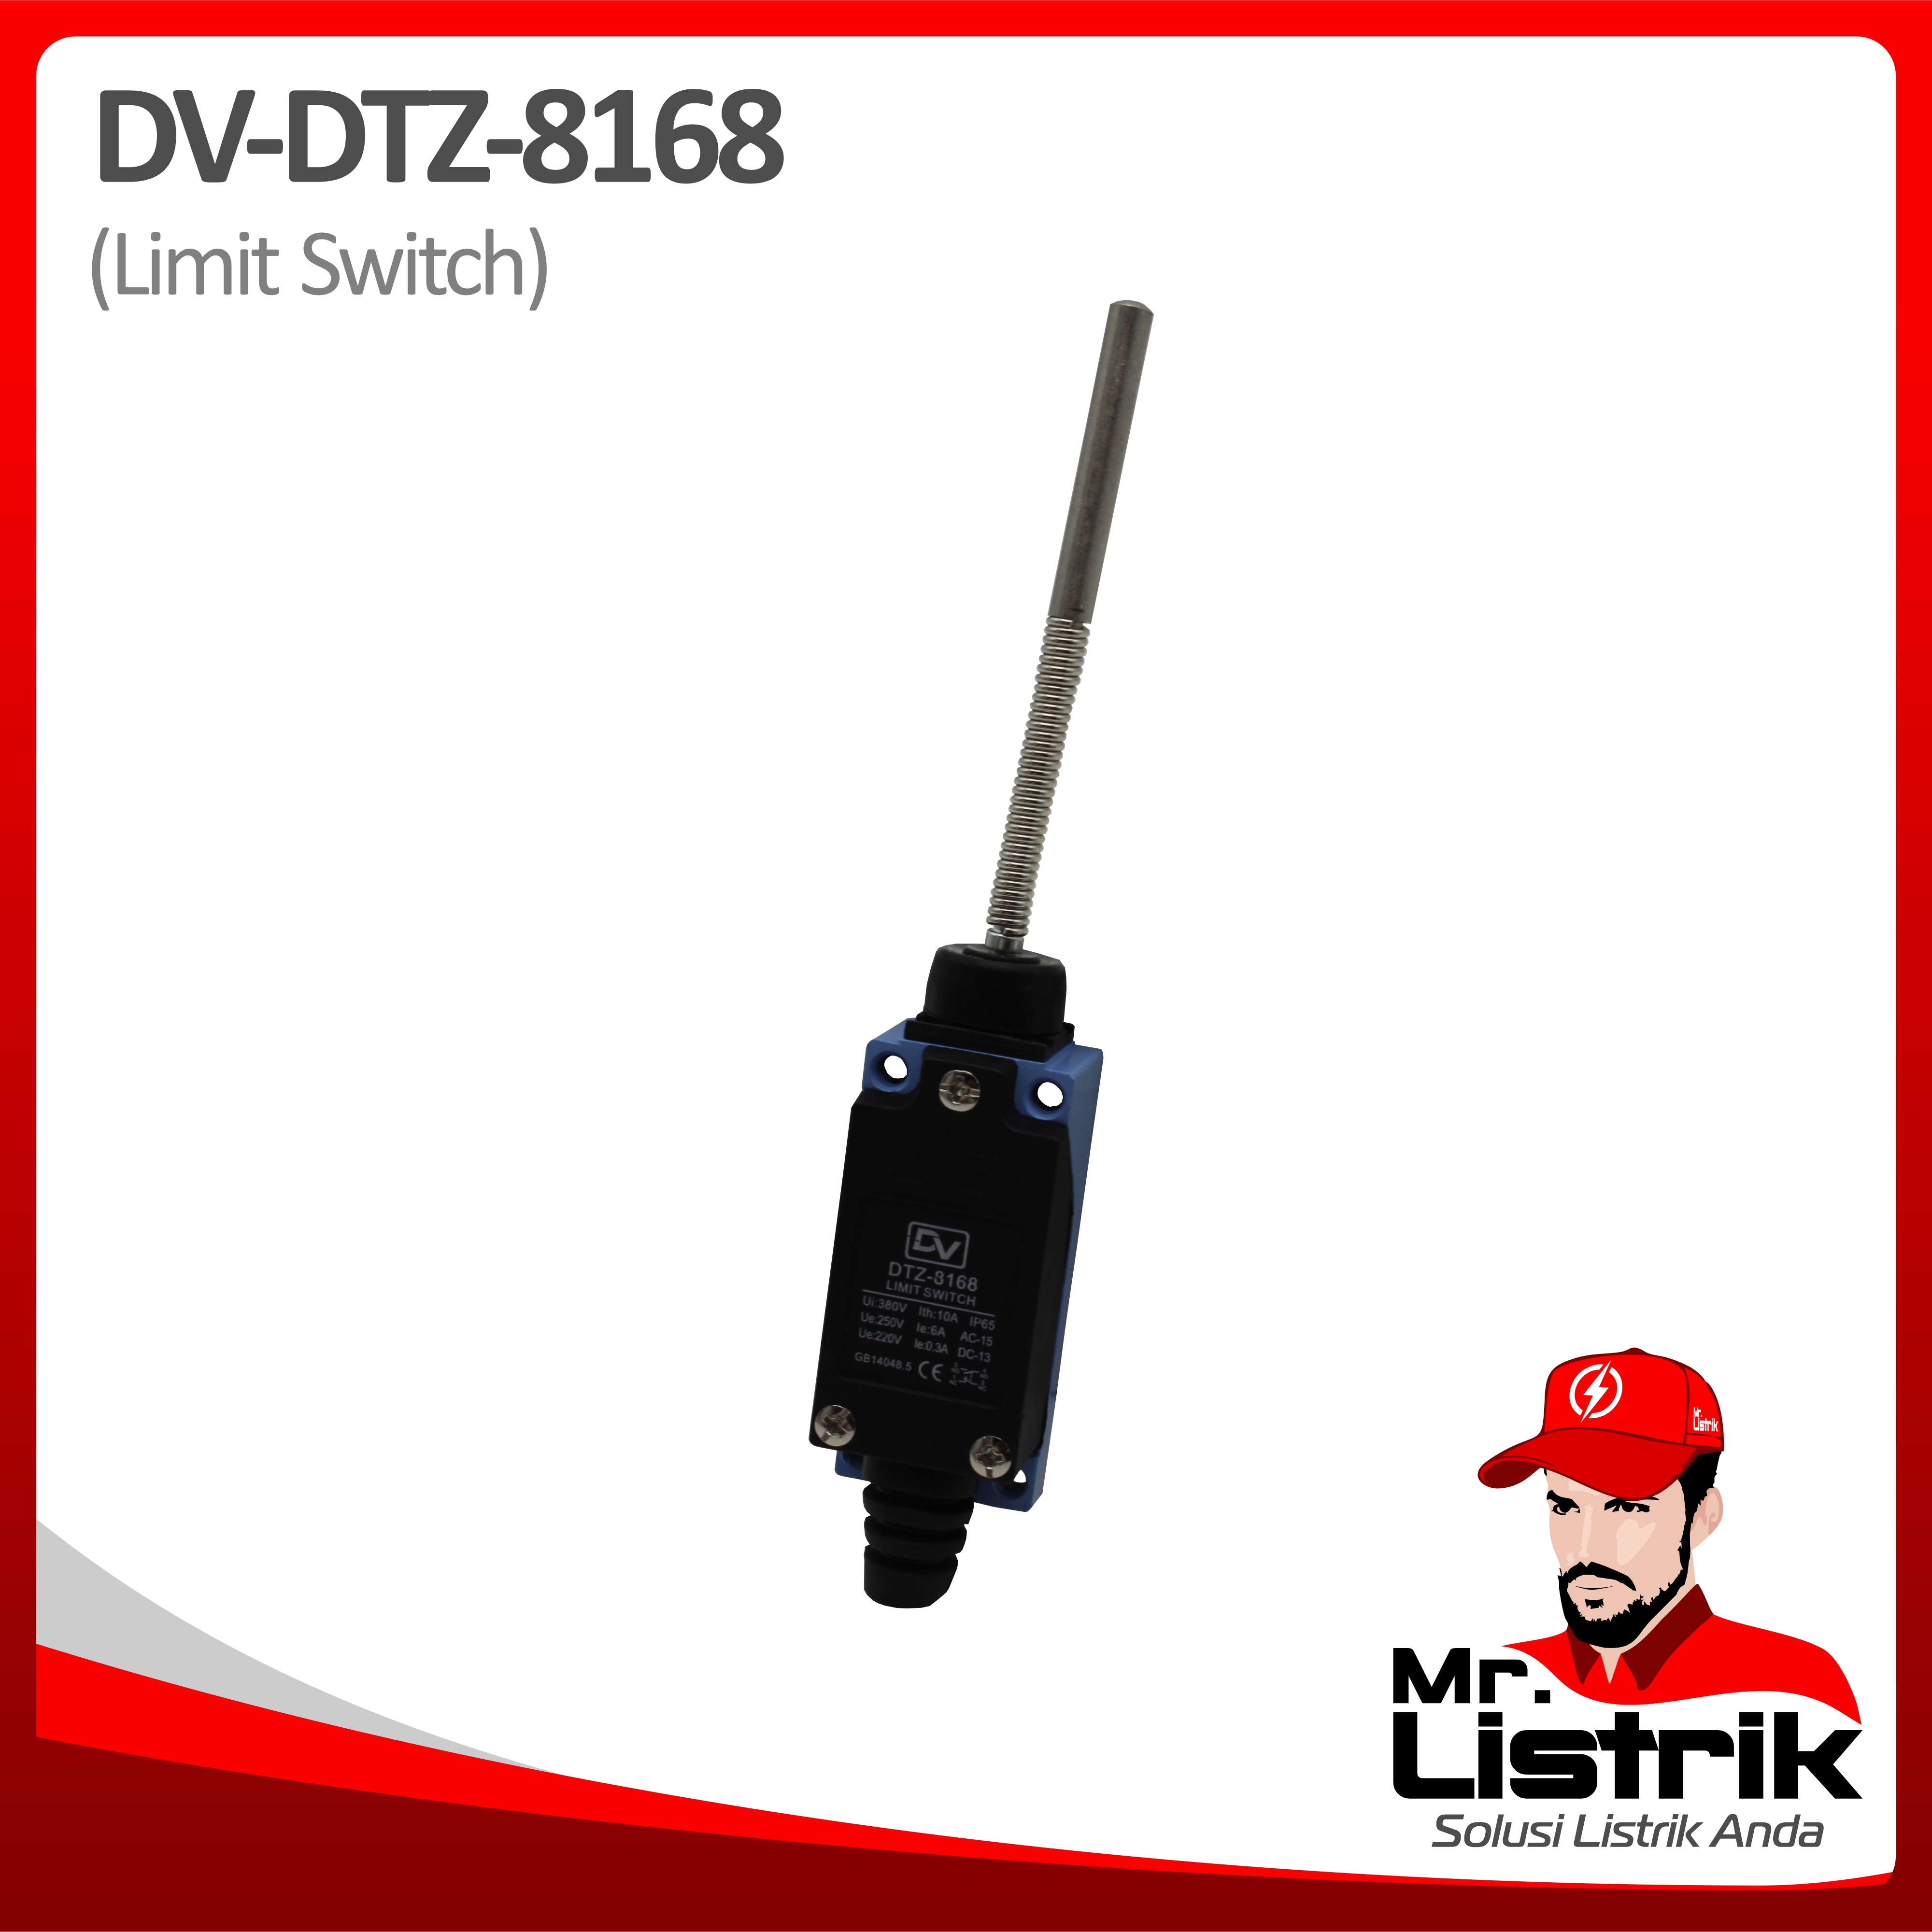 Limit Switch TZ Series DV DTZ-8168